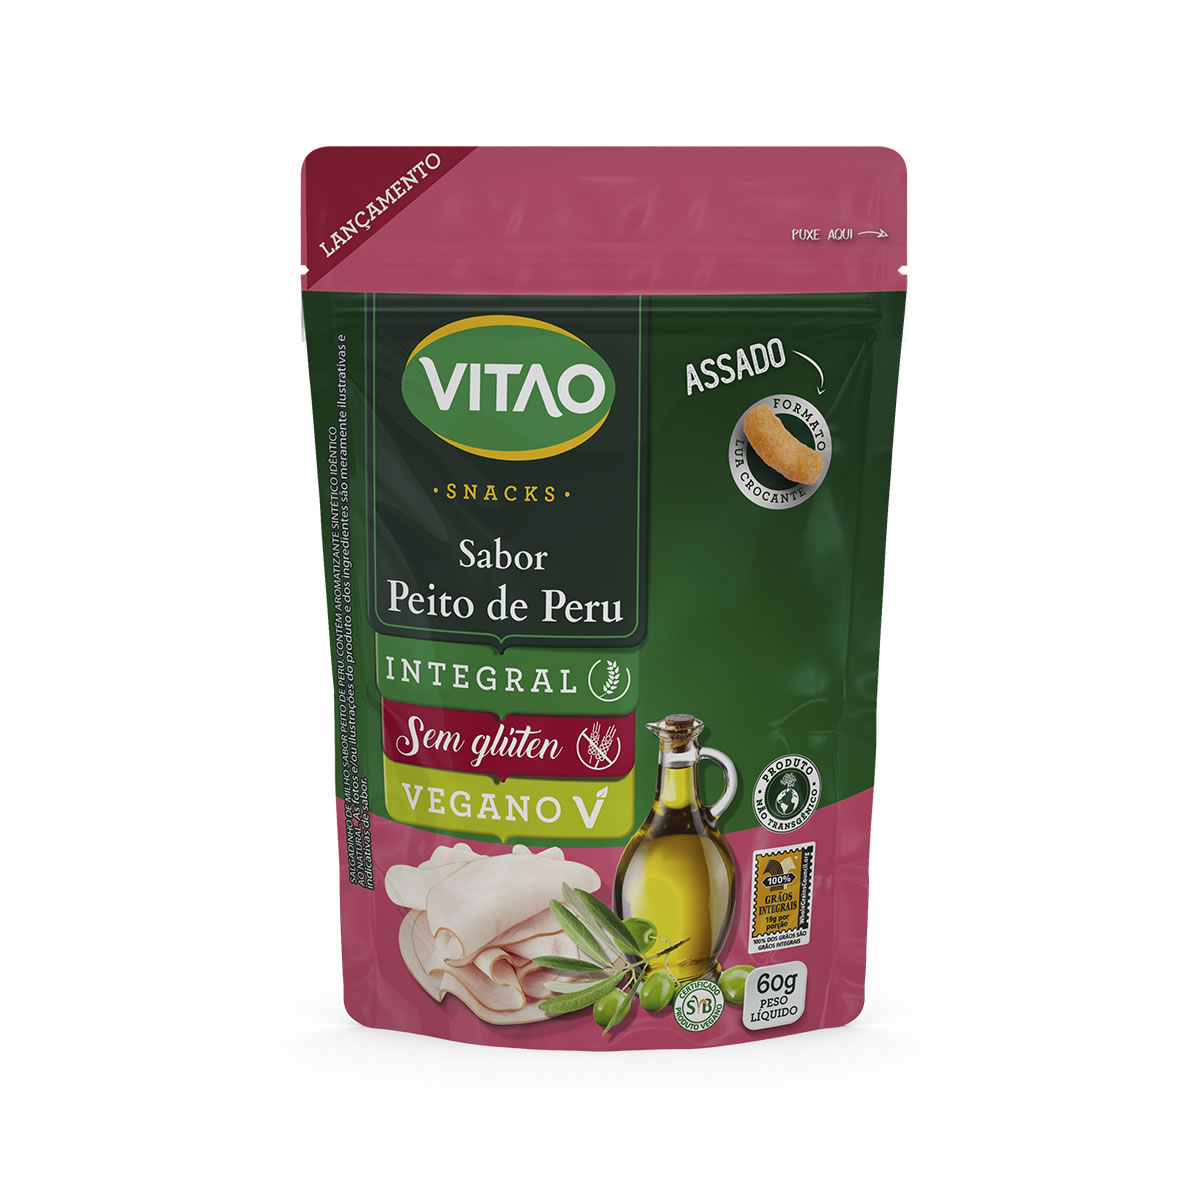 Snacks Integral Sabor Peito de Peru 60g - Vitao